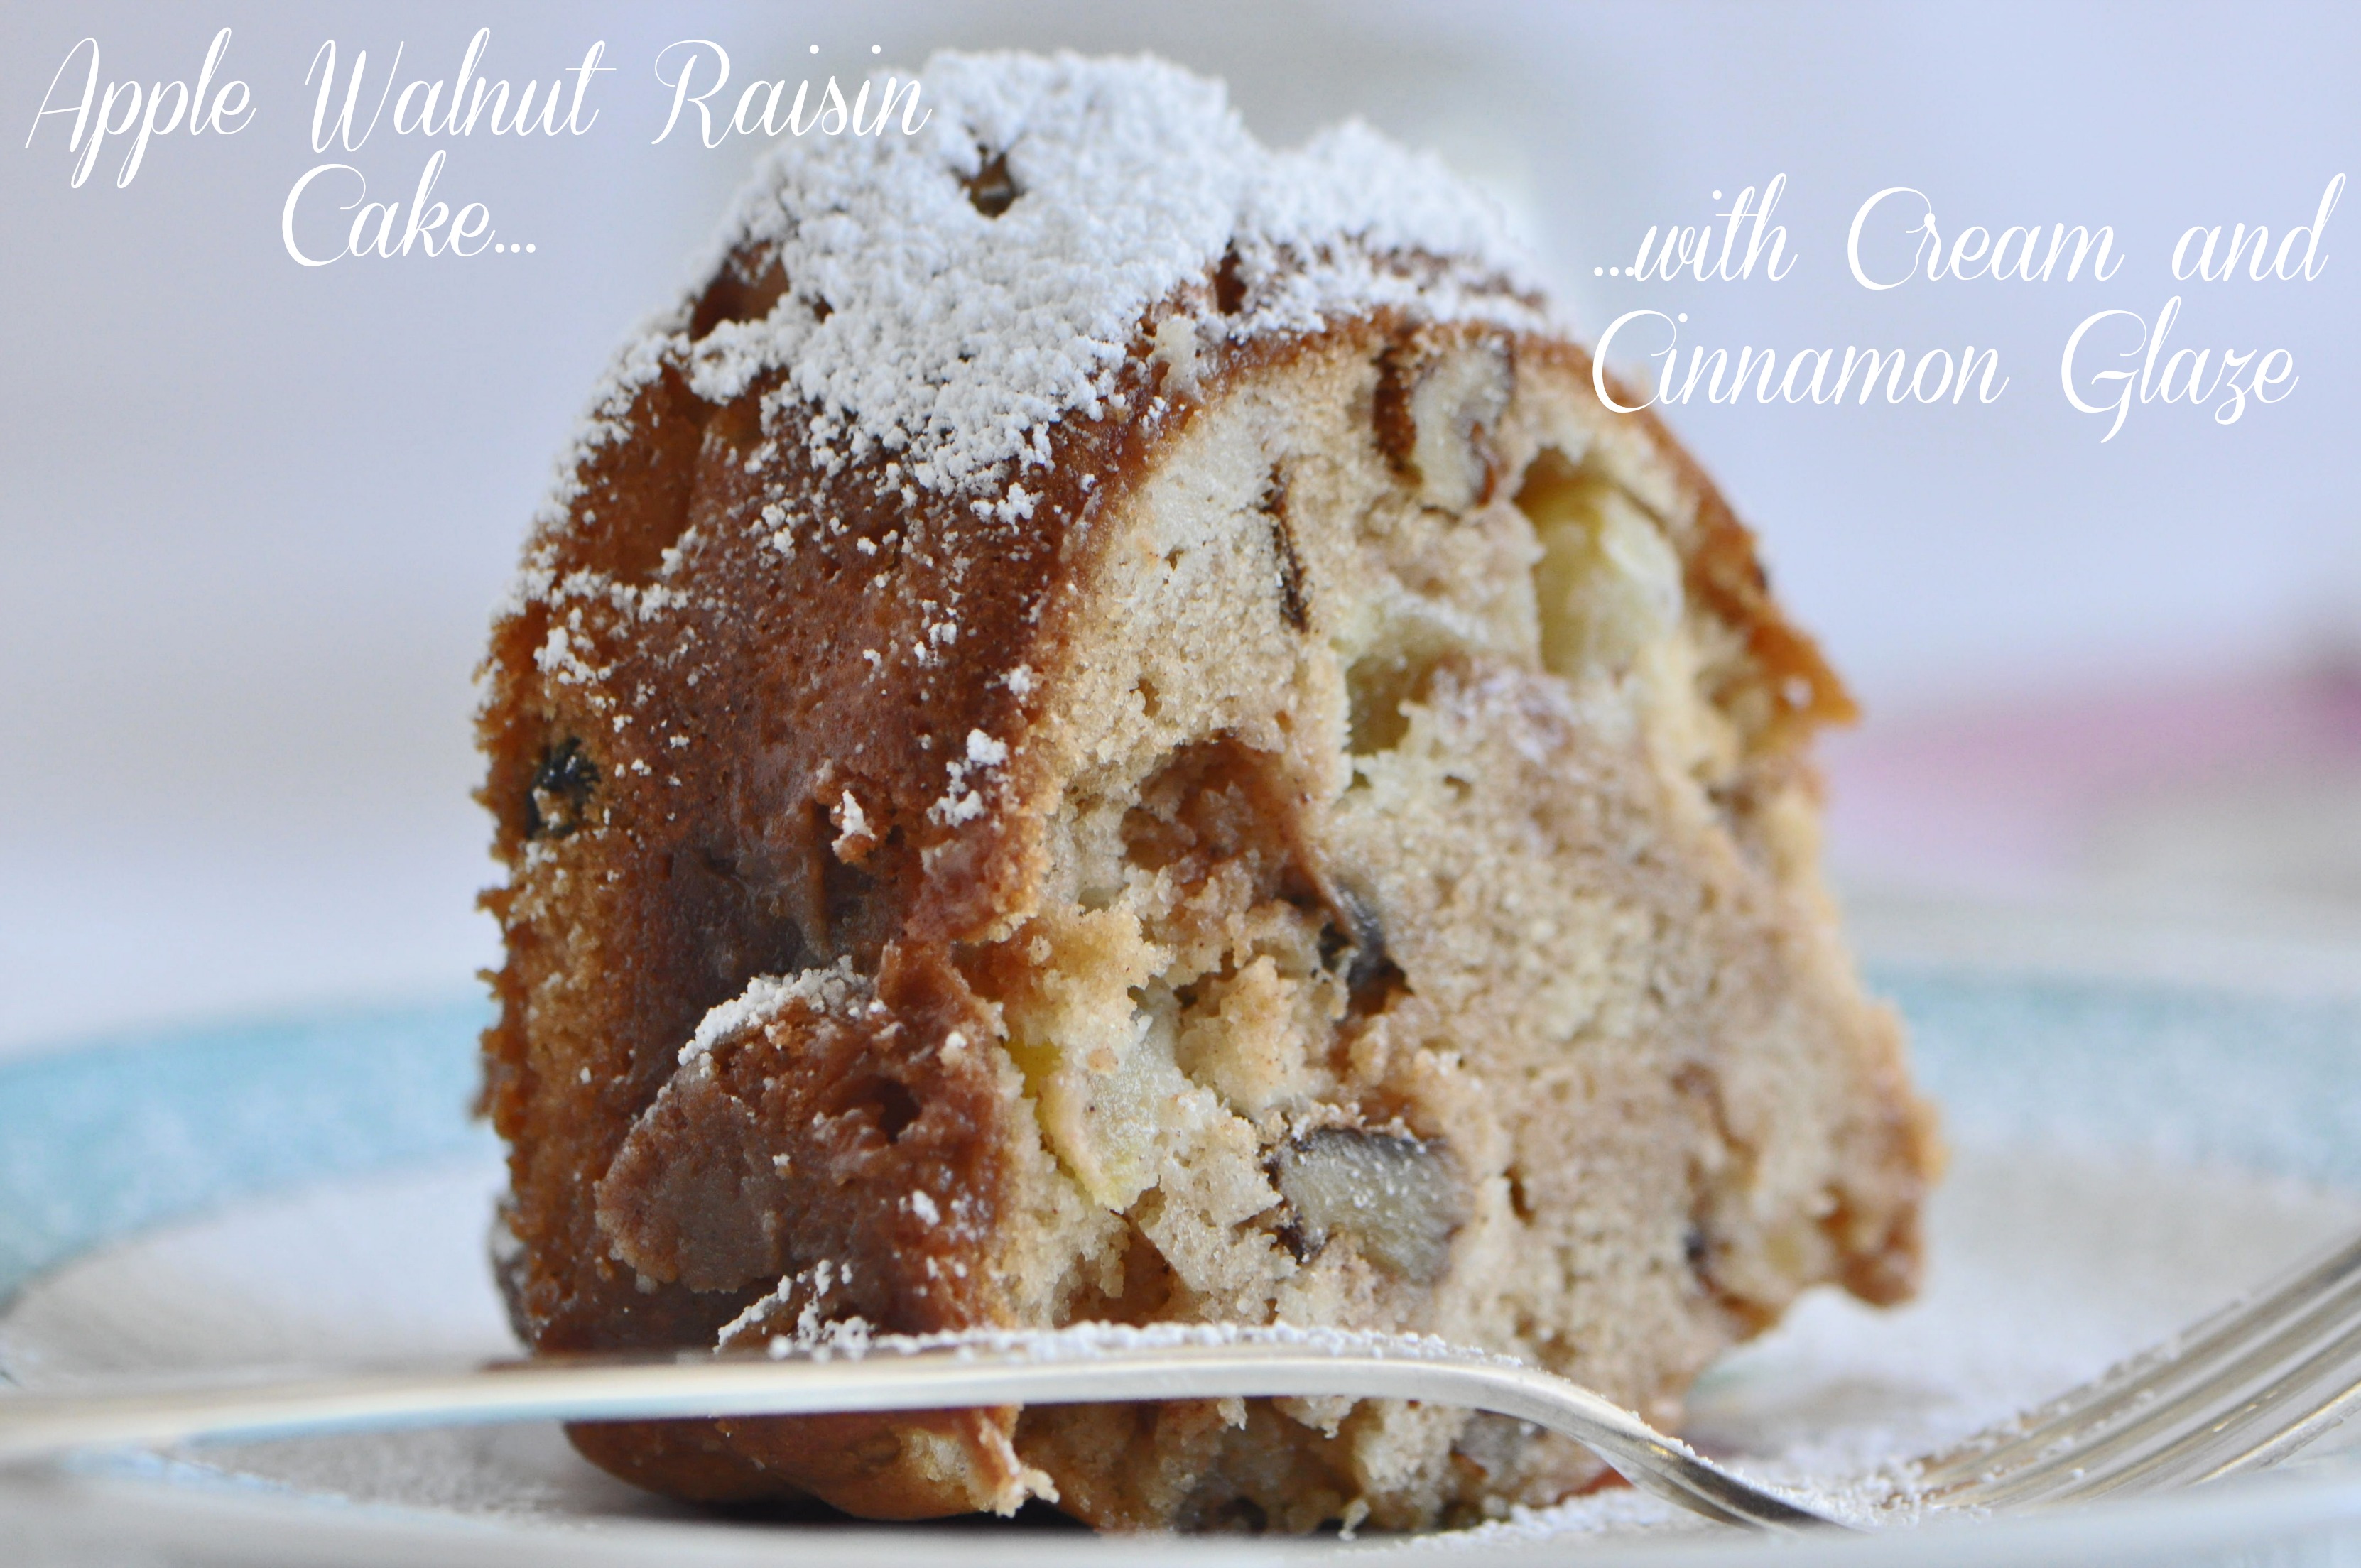 http://www.siftingfocus.com/wp-content/uploads/2013/10/Apple-Walnut-Raisin-Cake-with-Cream-and-Cinnamon-Glaze101813007PSEPM.jpg